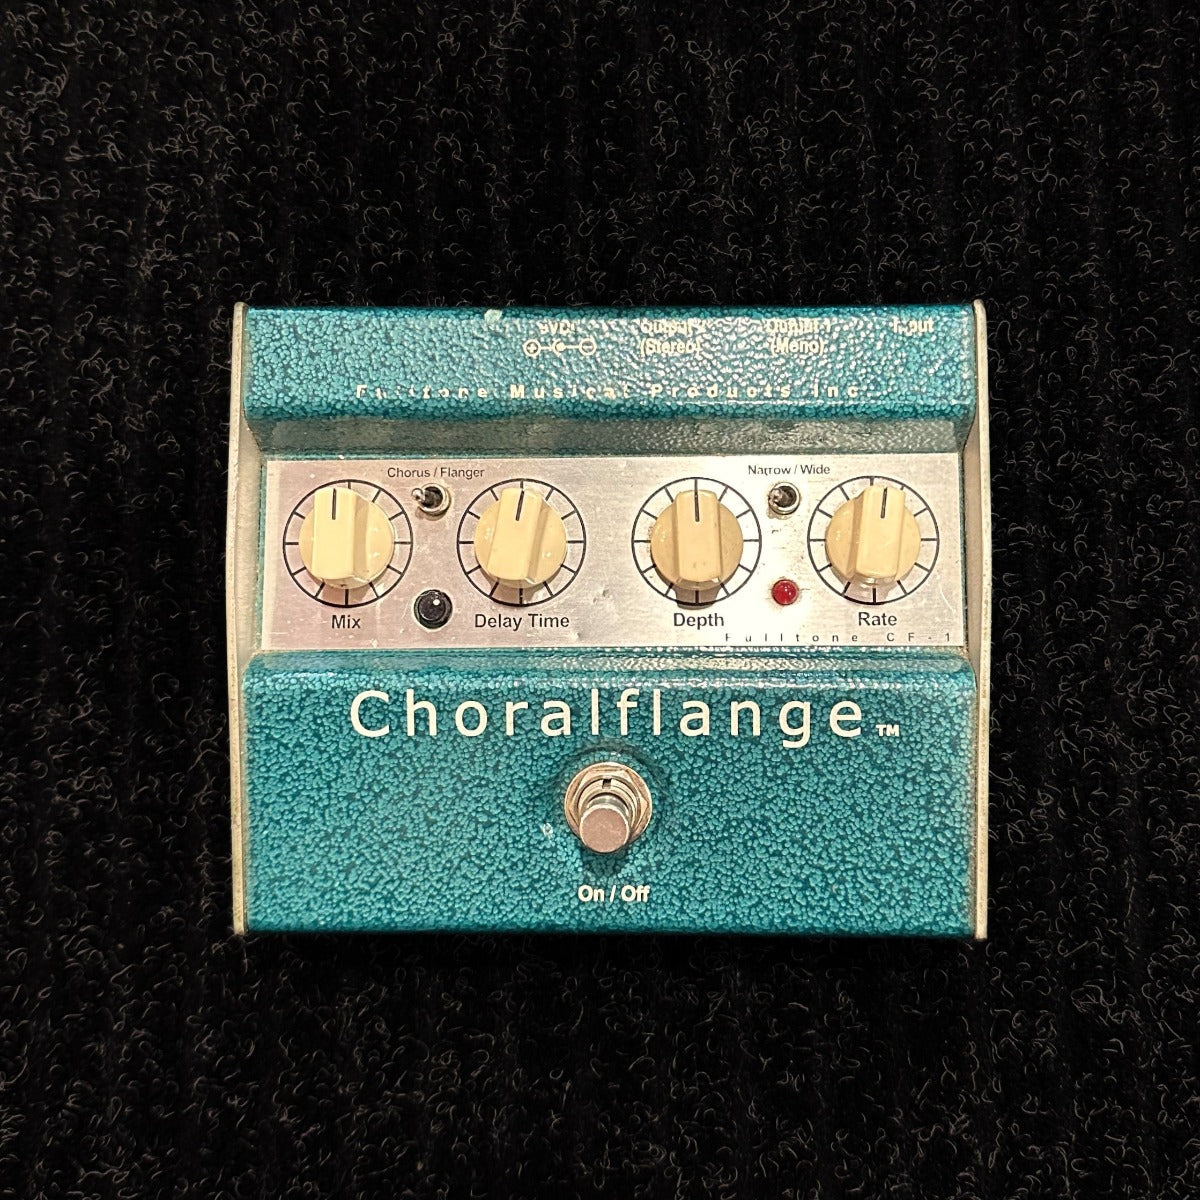 Choralflange, Recent